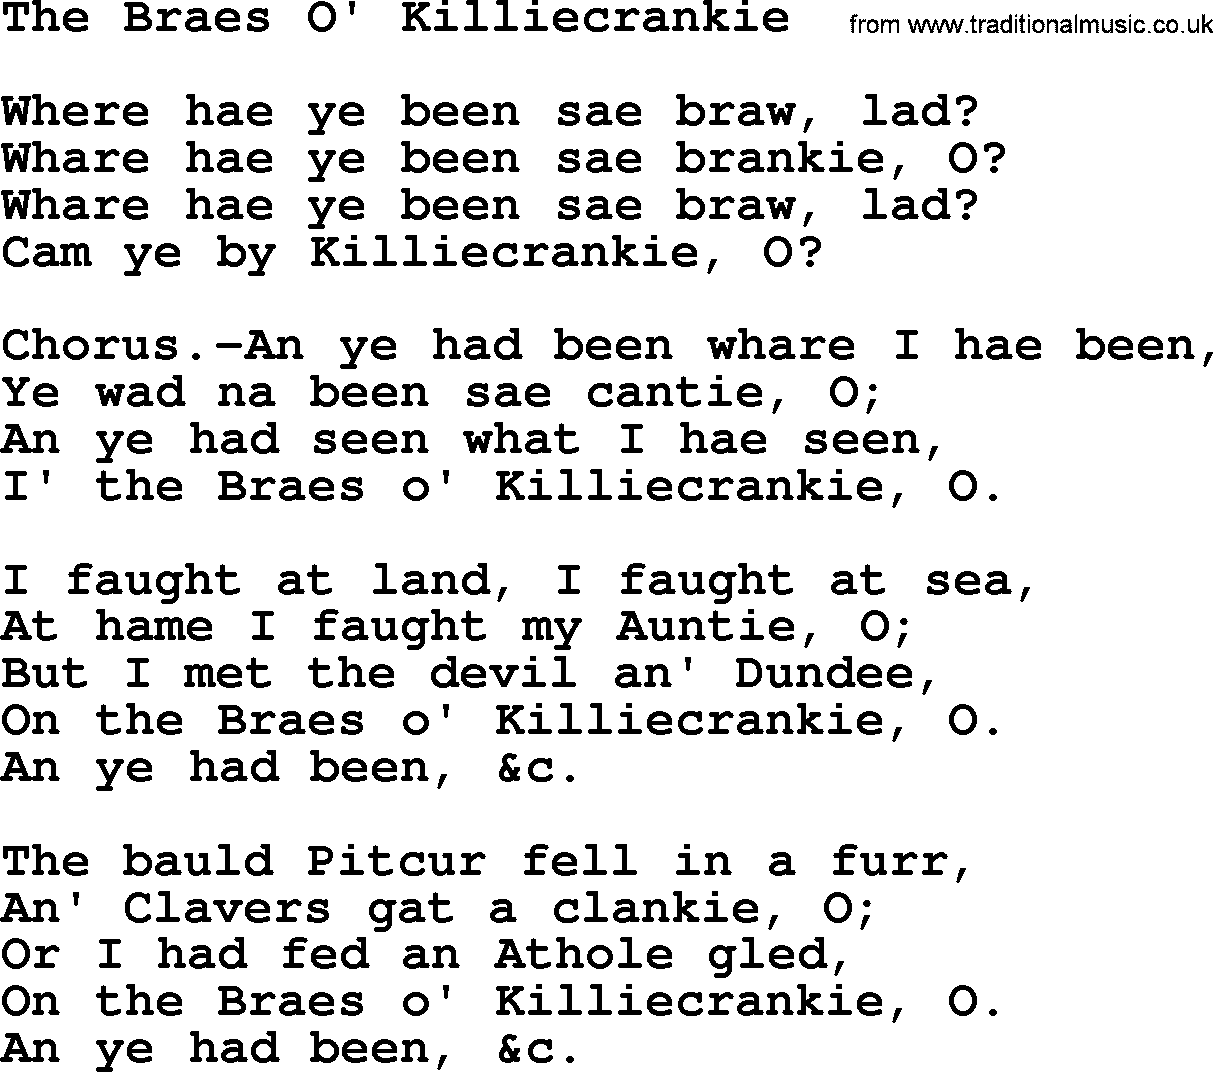 Robert Burns Songs & Lyrics: The Braes O' Killiecrankie